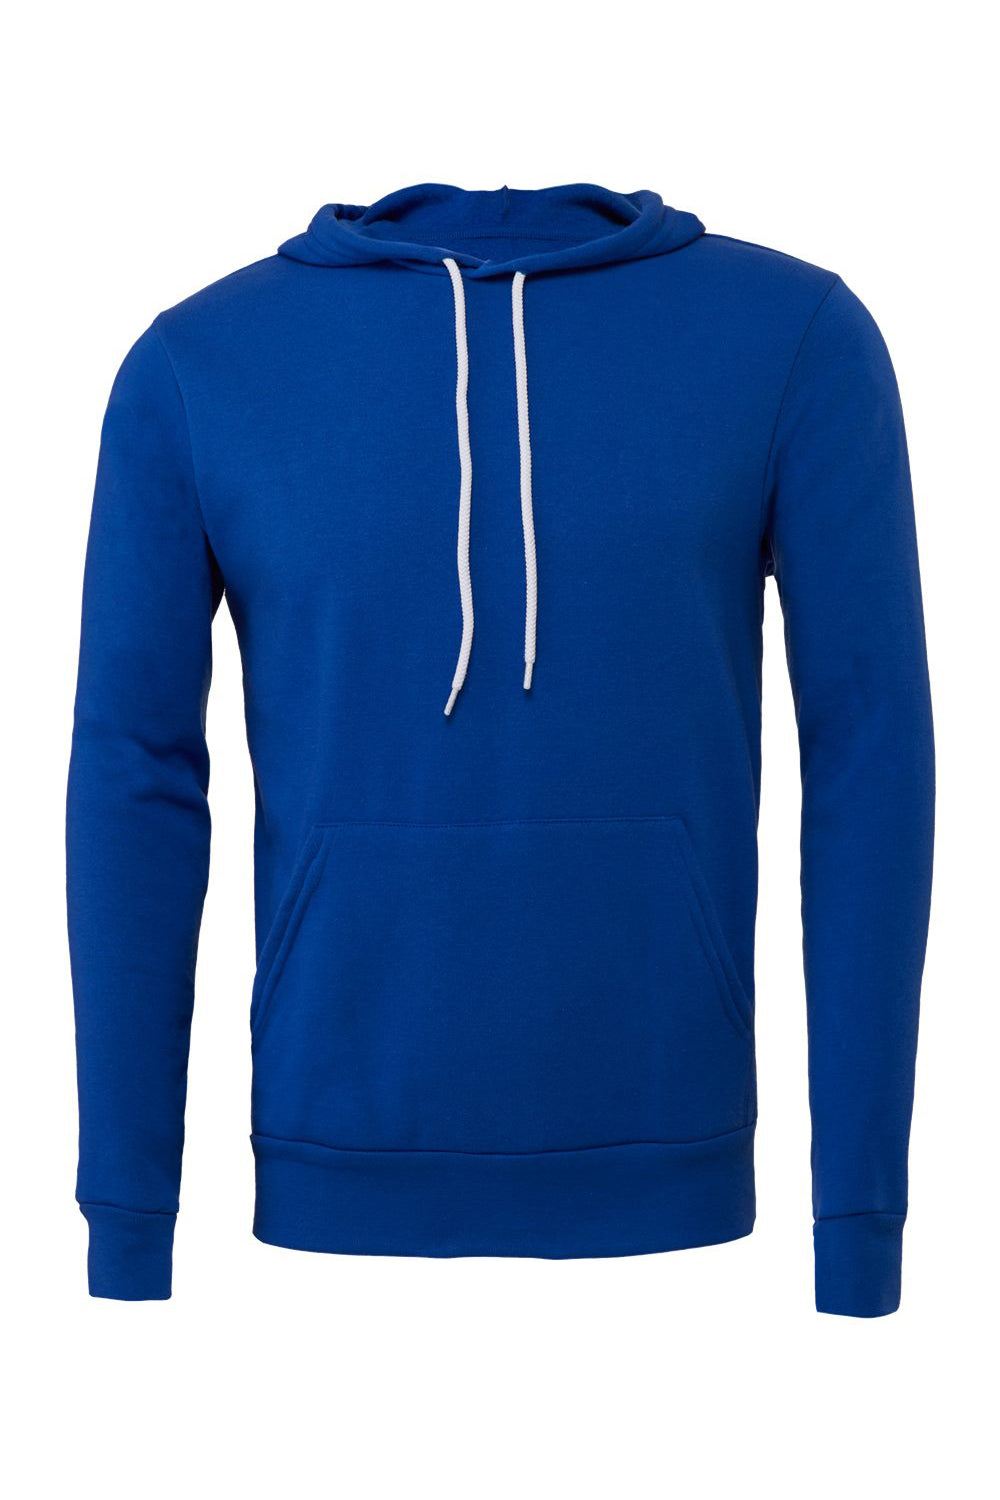 Bella + Canvas BC3719/3719 Mens Sponge Fleece Hooded Sweatshirt Hoodie True Royal Blue Flat Front